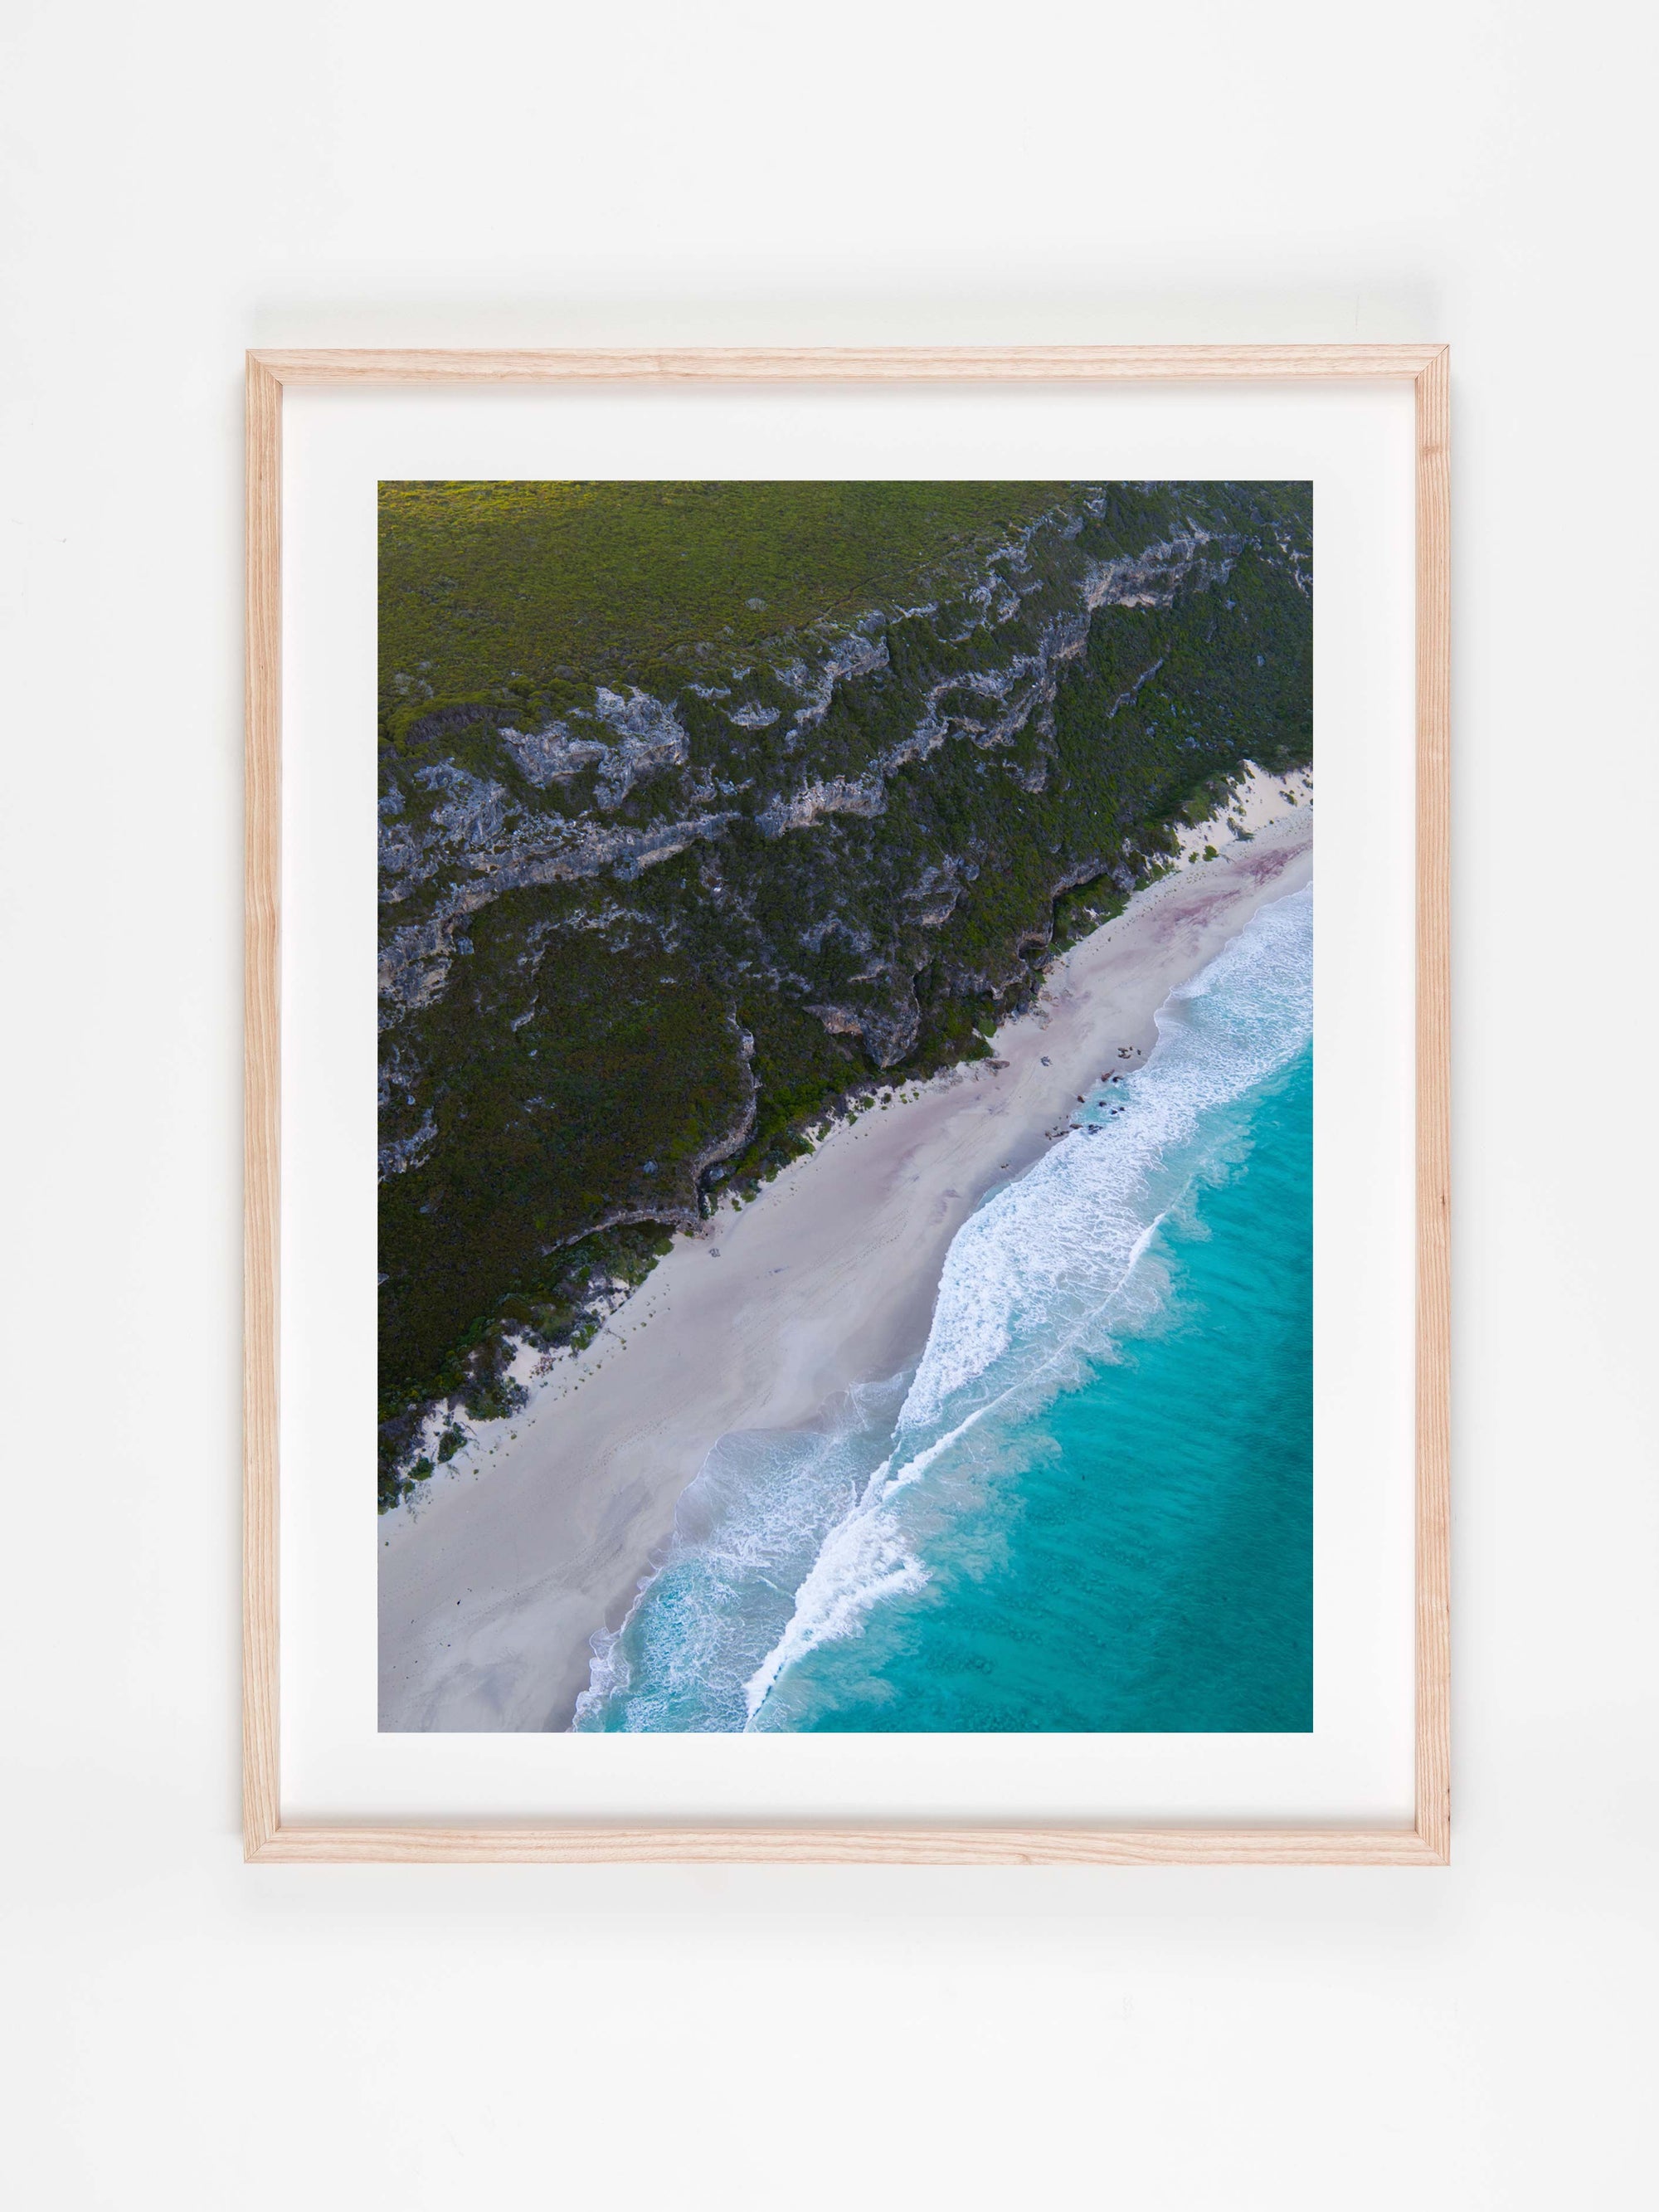 SW0109 - Contos Beach